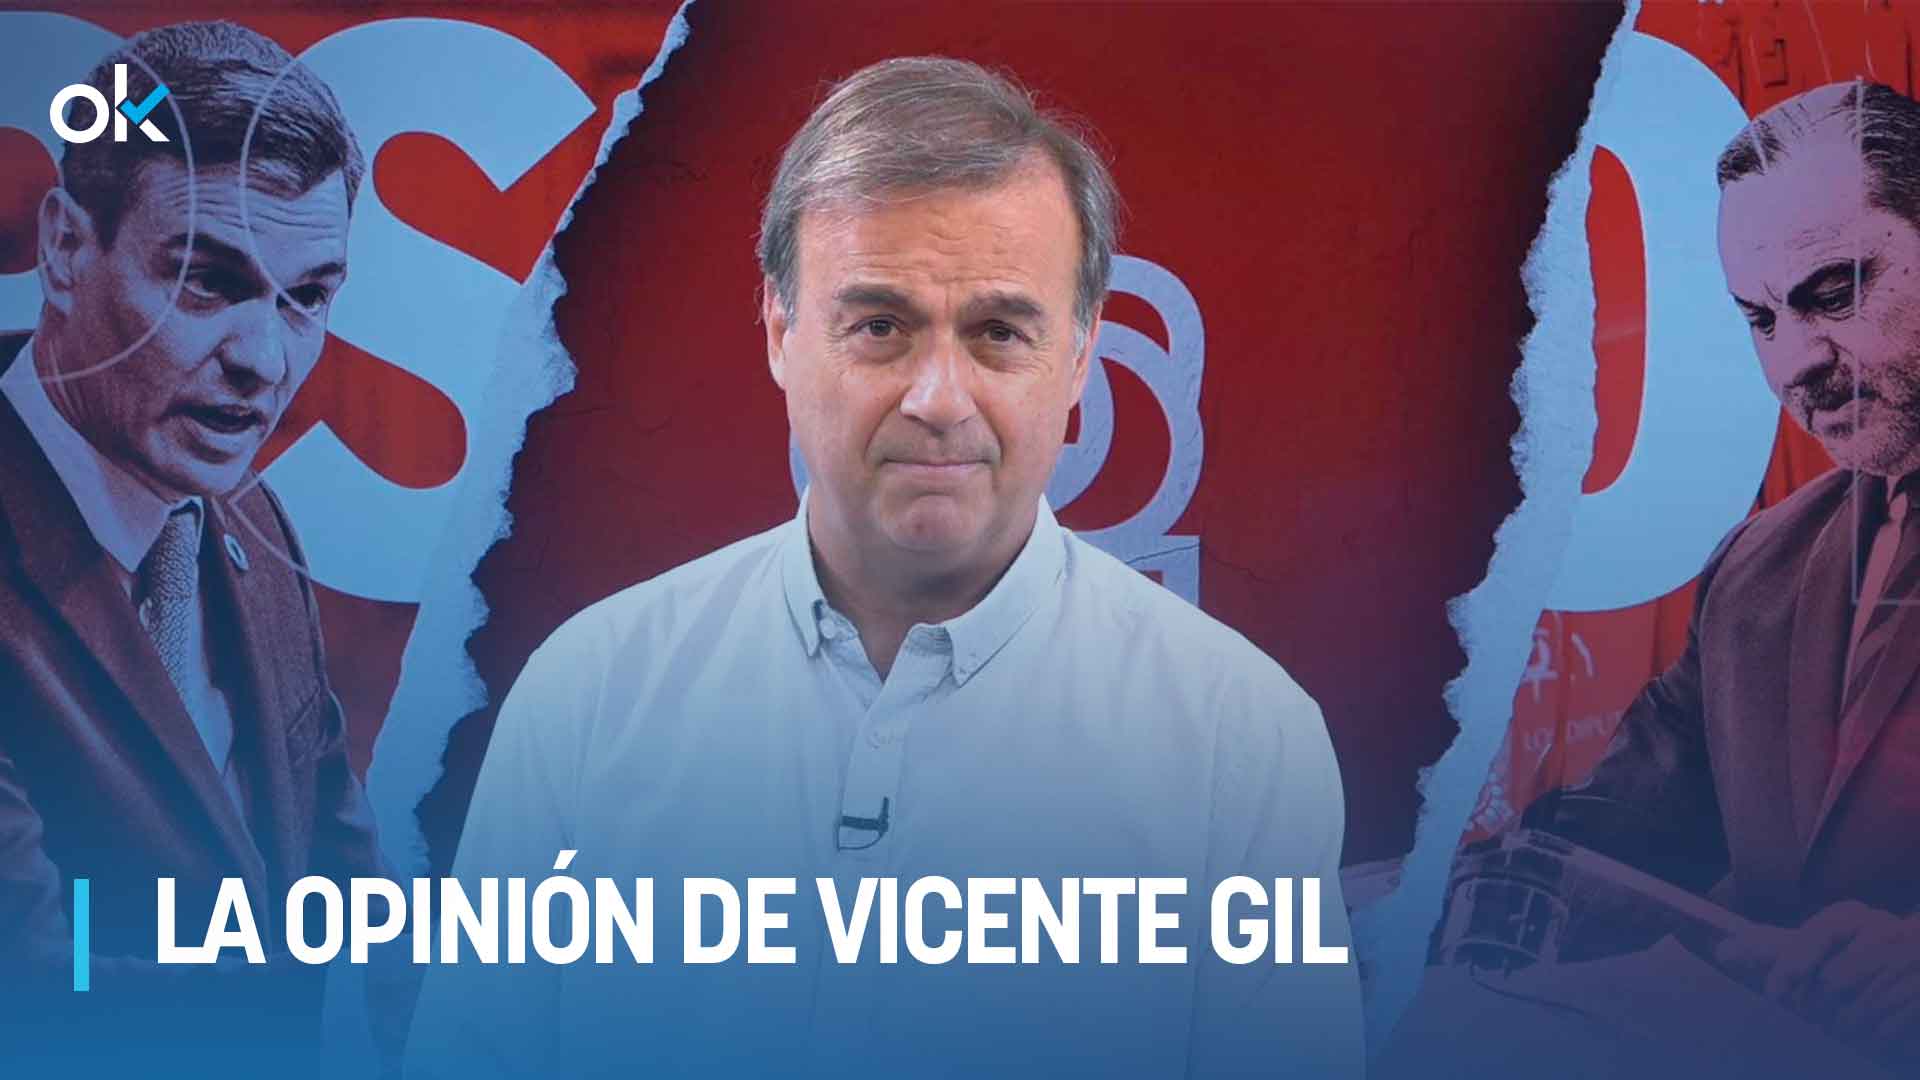 Vicente Gil